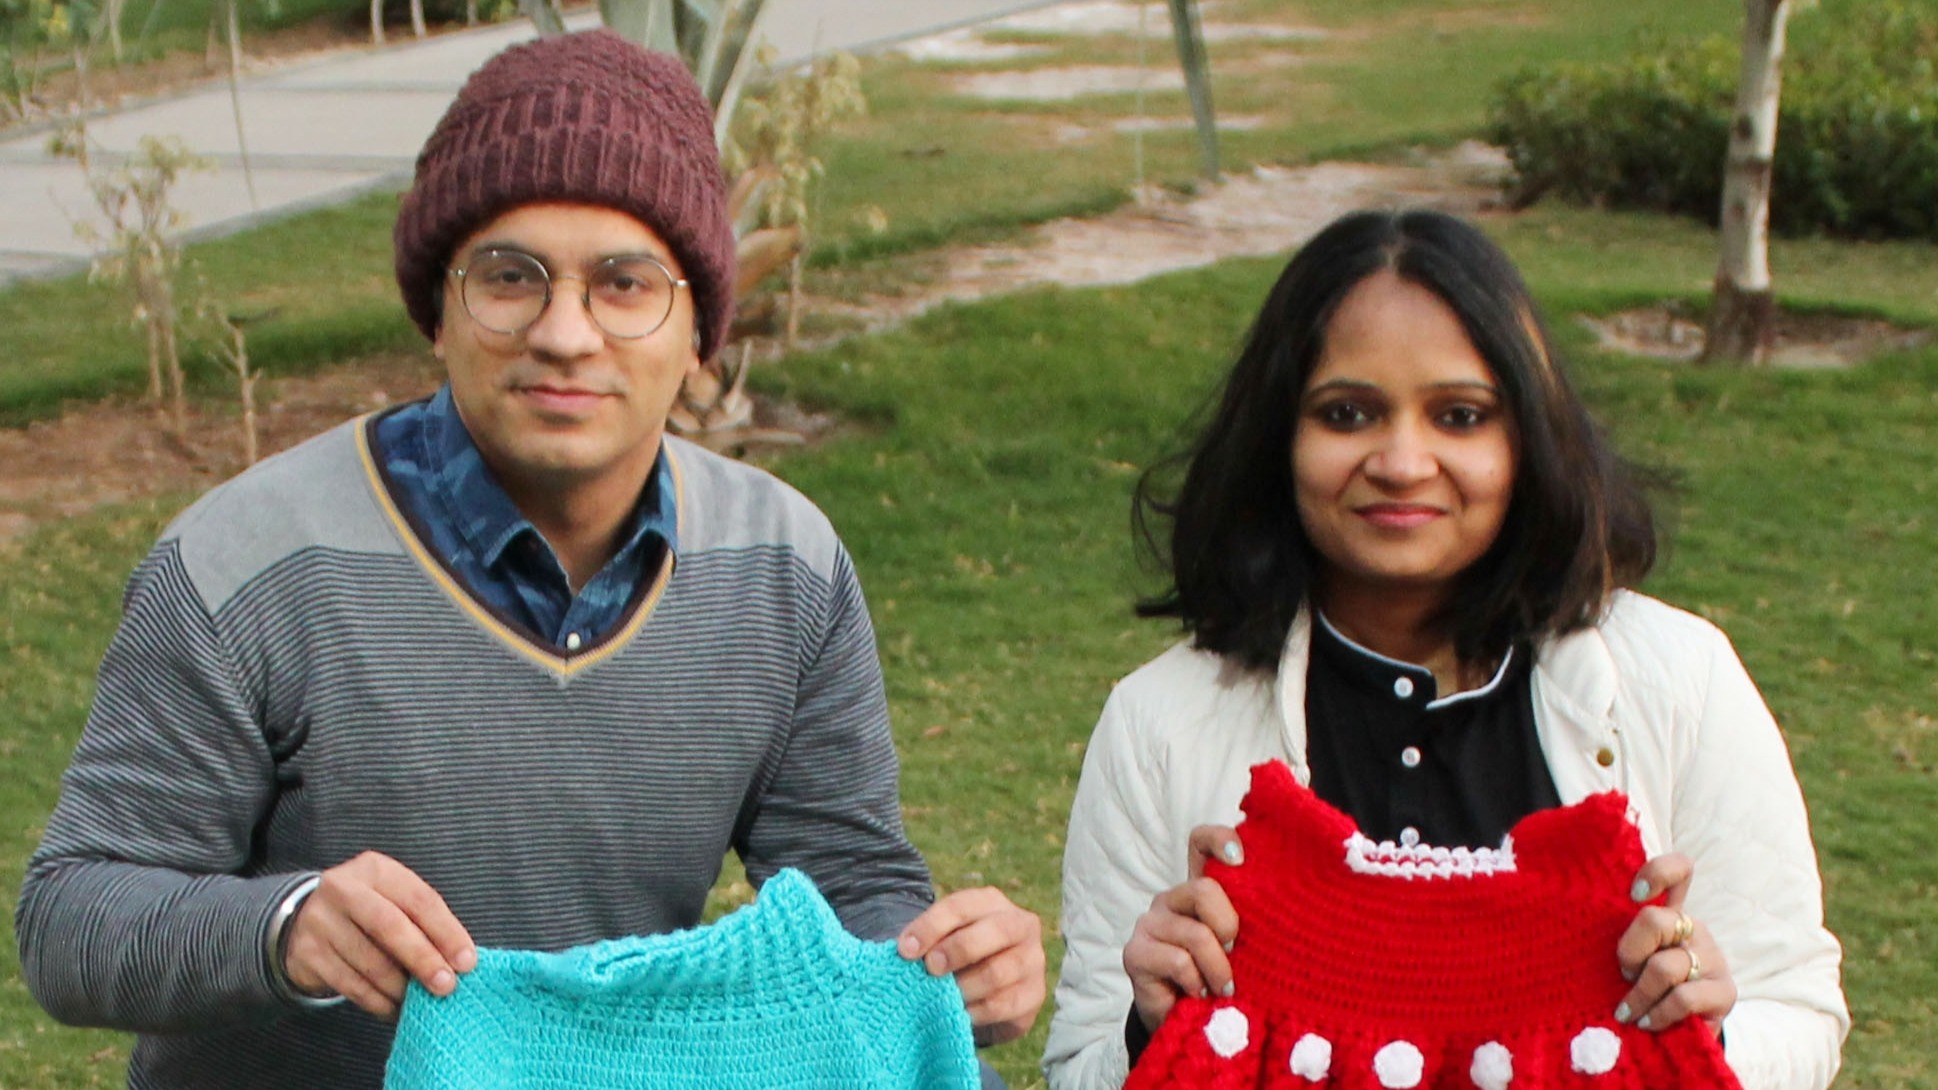 Knitting Little Dreams And Joy Through Her Crochet Sonipat Based Motherpreneur Making It Big